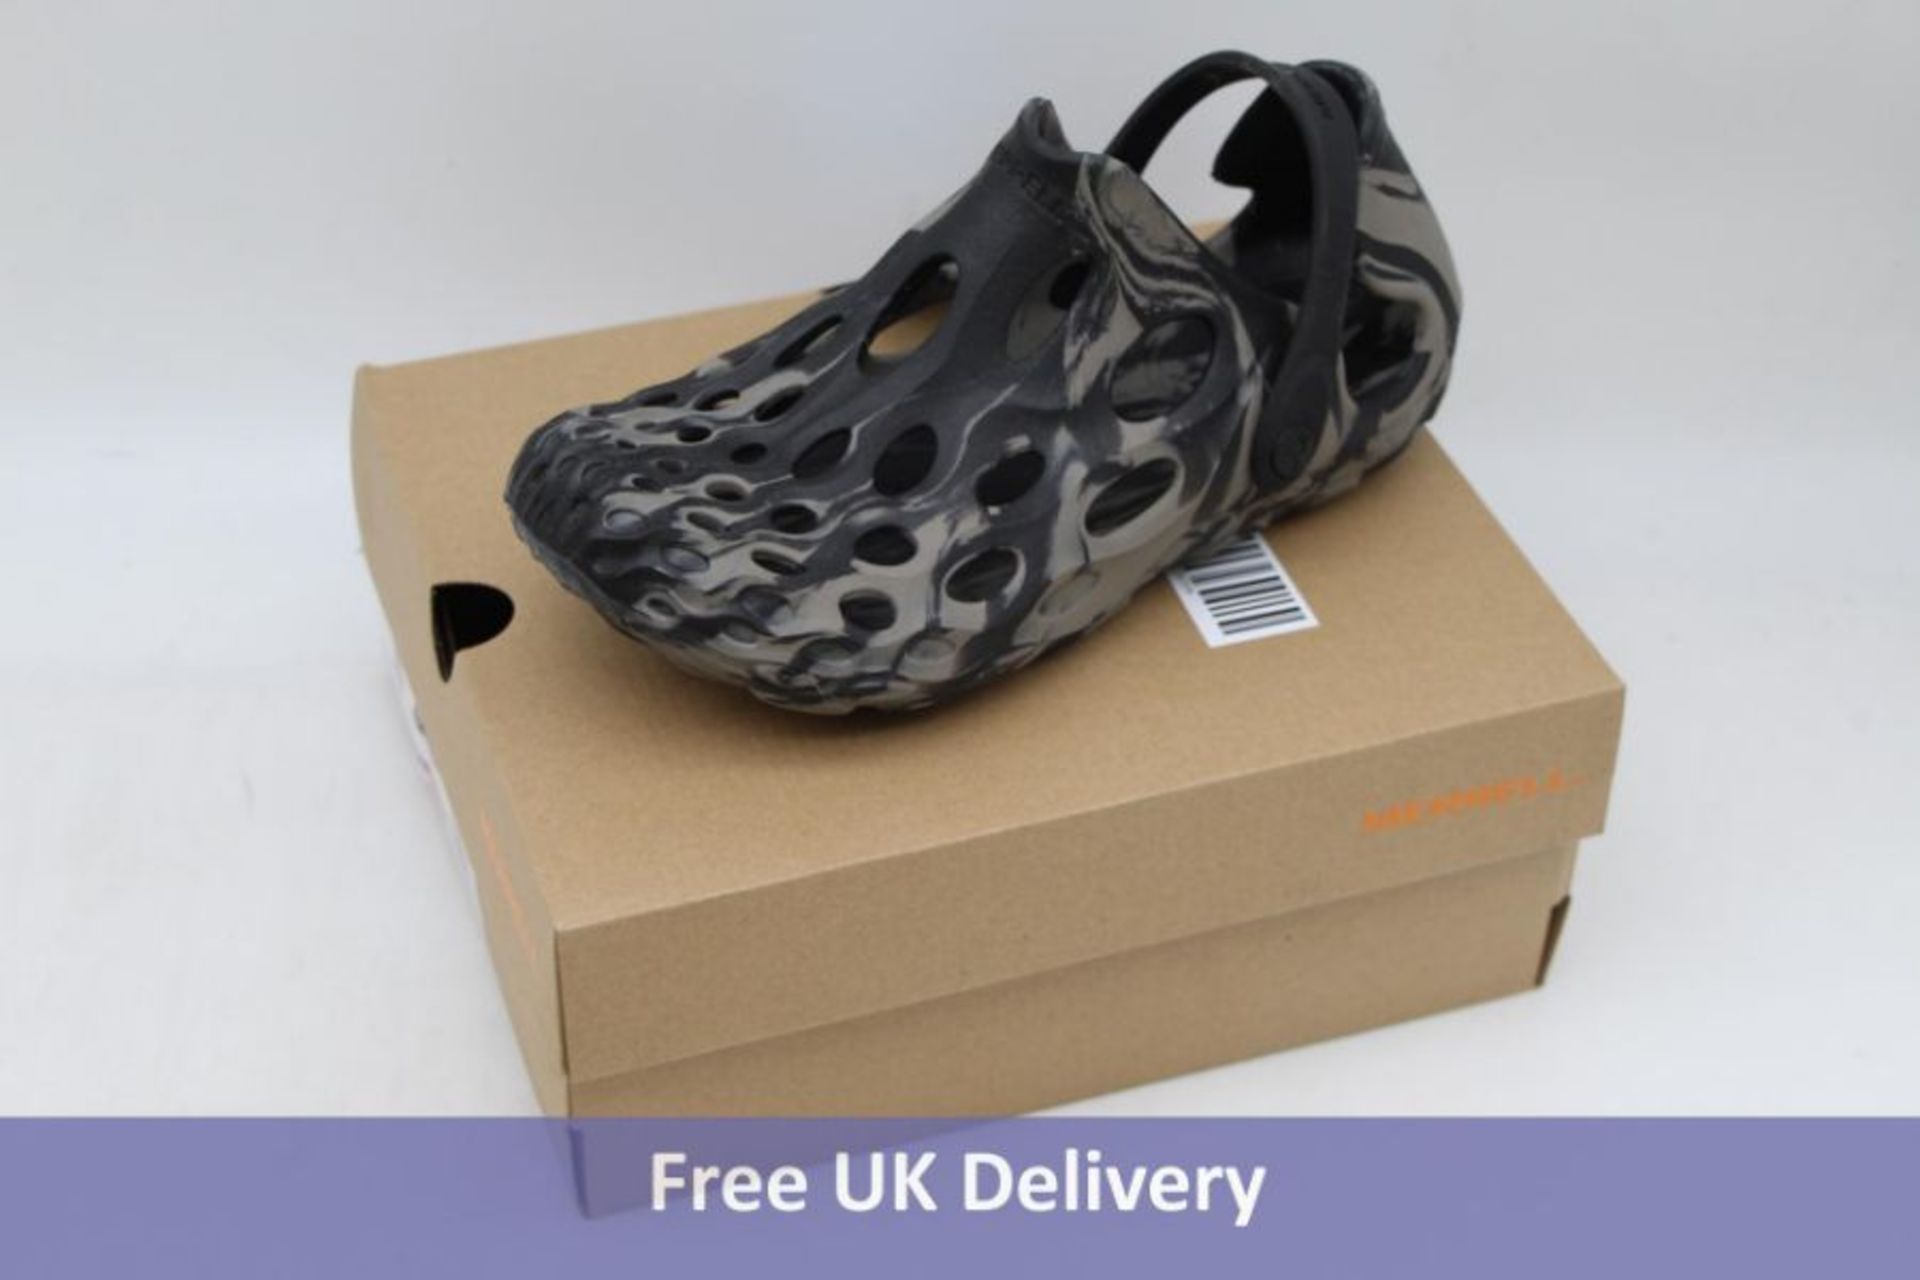 Three Merrell Hydro Moc Women's Sandals, Black/Brindle, 1x UK 4, 2x UK 5 - Image 3 of 3